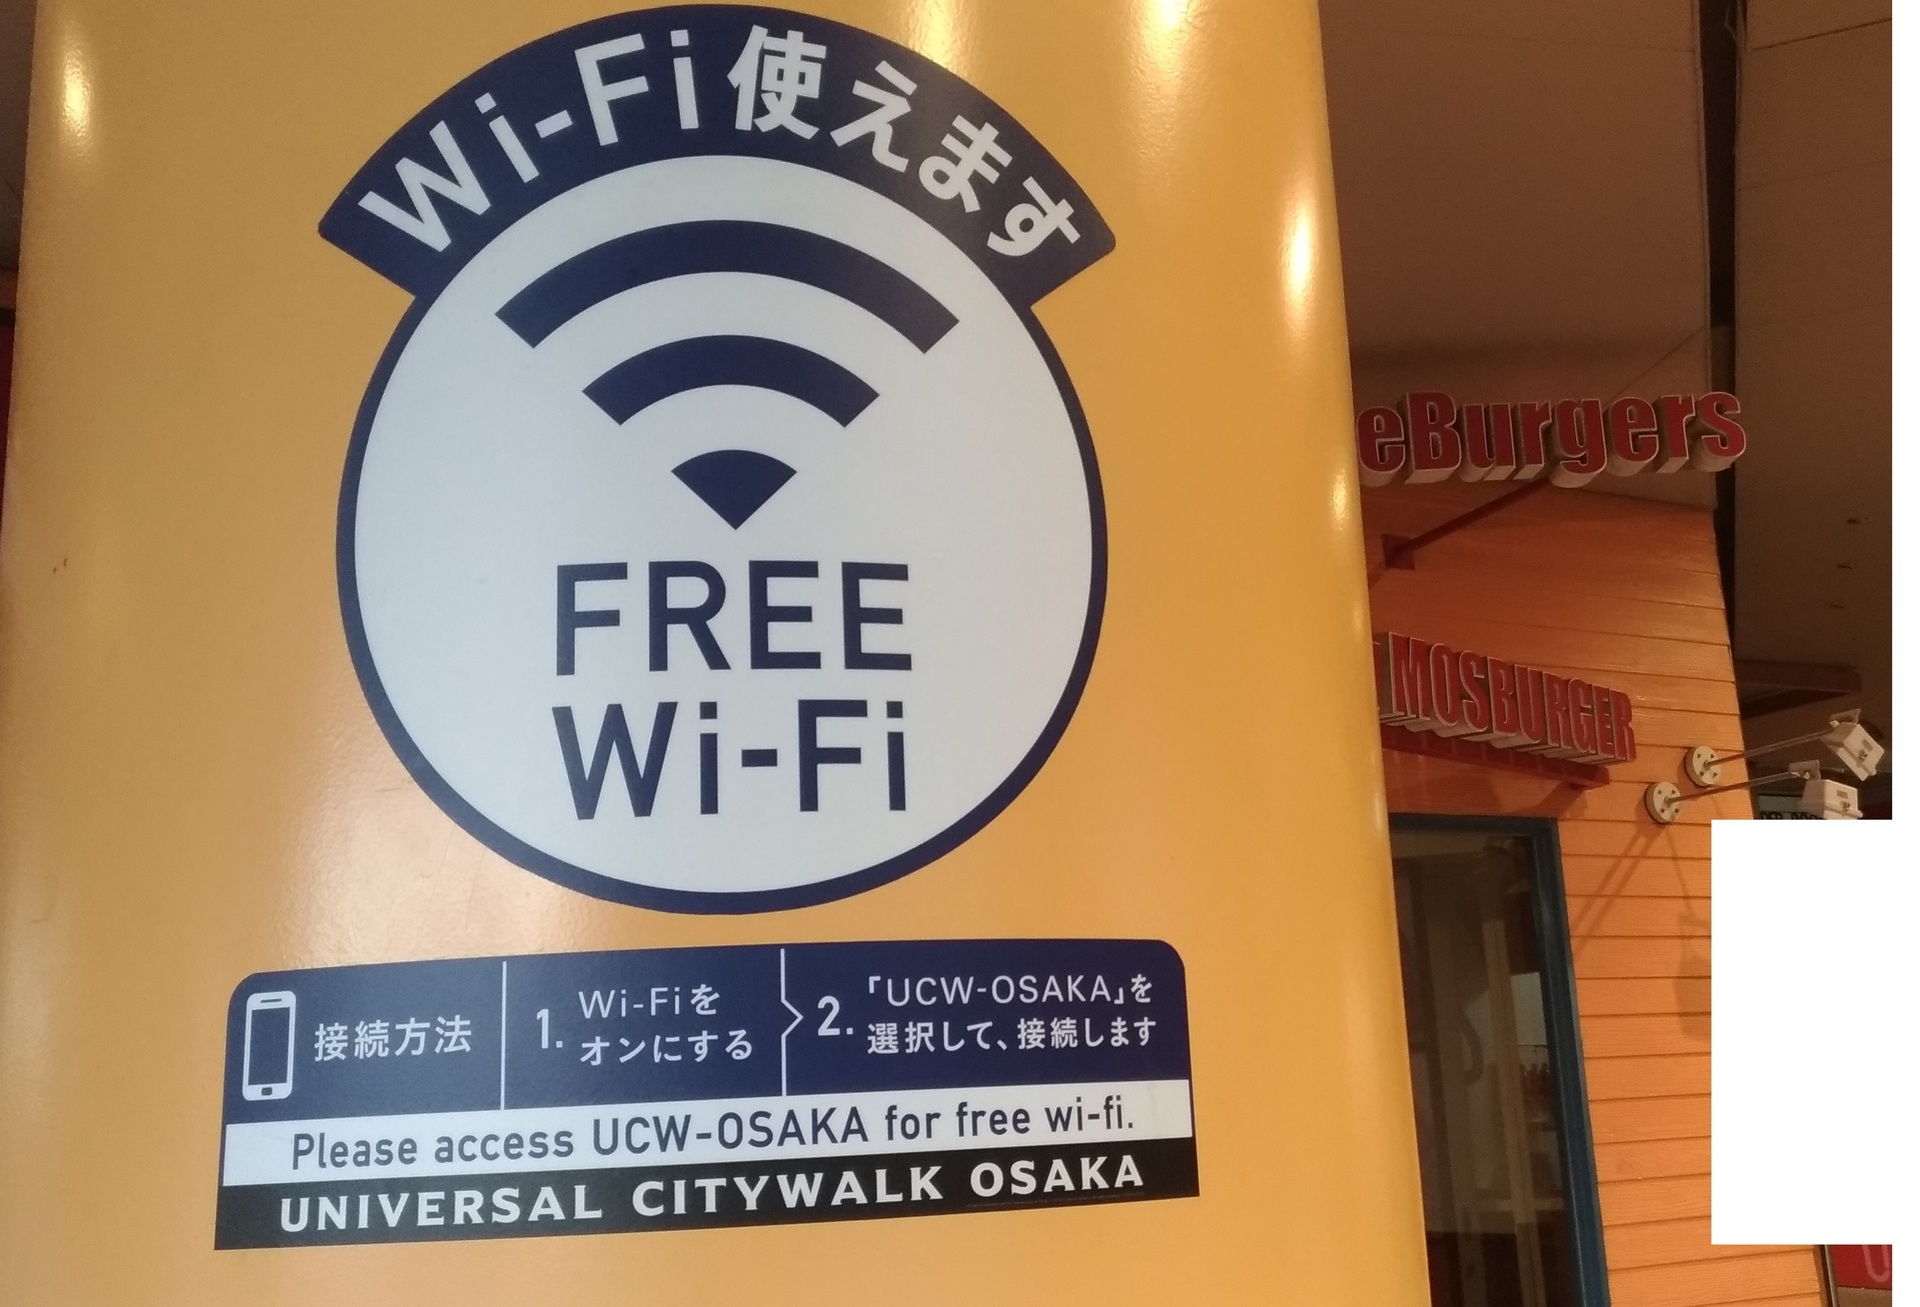 Usj 無料wifi接続サービス 11月10日スマホからパスワードなし Wifi無料 大阪アクセスポイントスマホで接続したい設定は